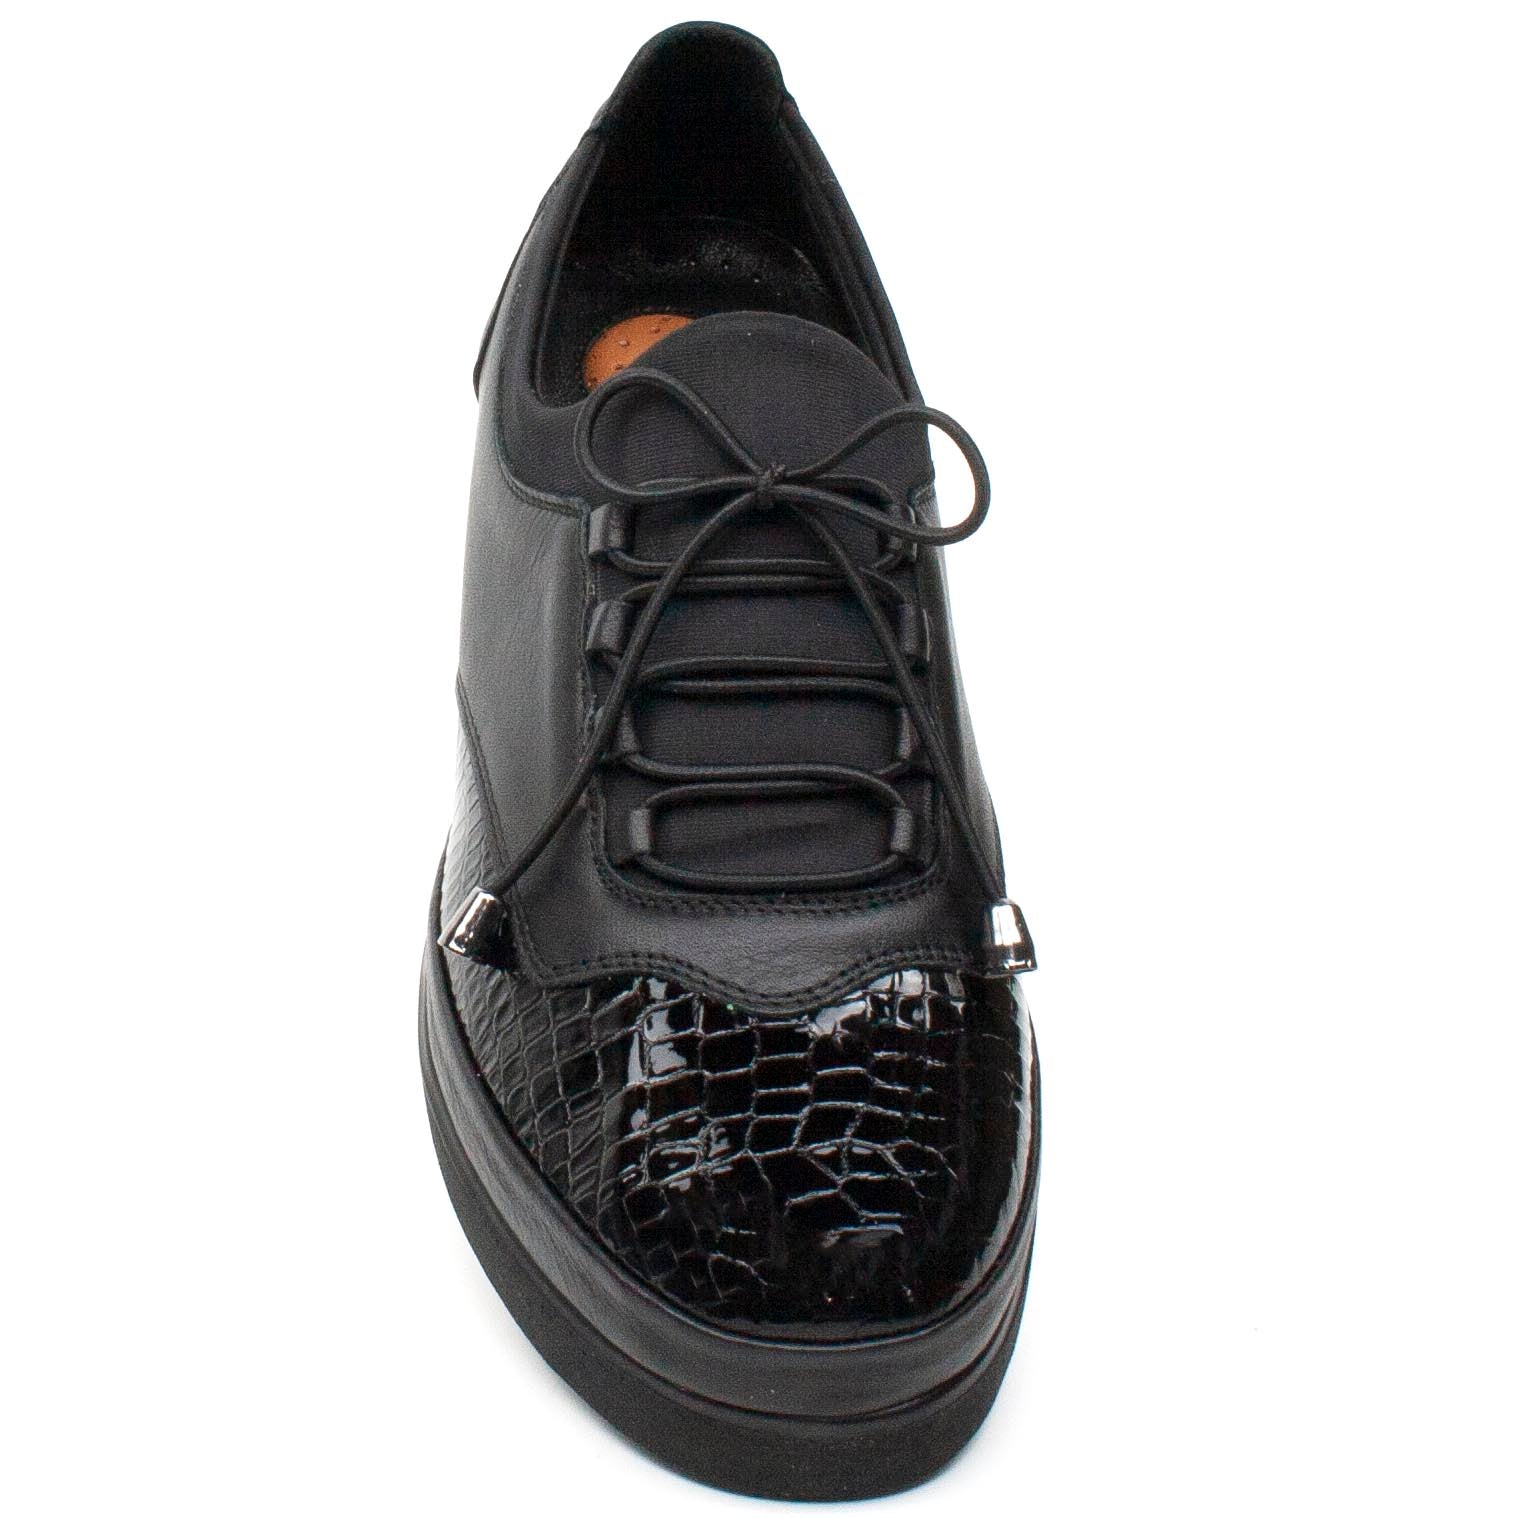 Caspian Pantofi dama 84 negru lac ID1628-NGL